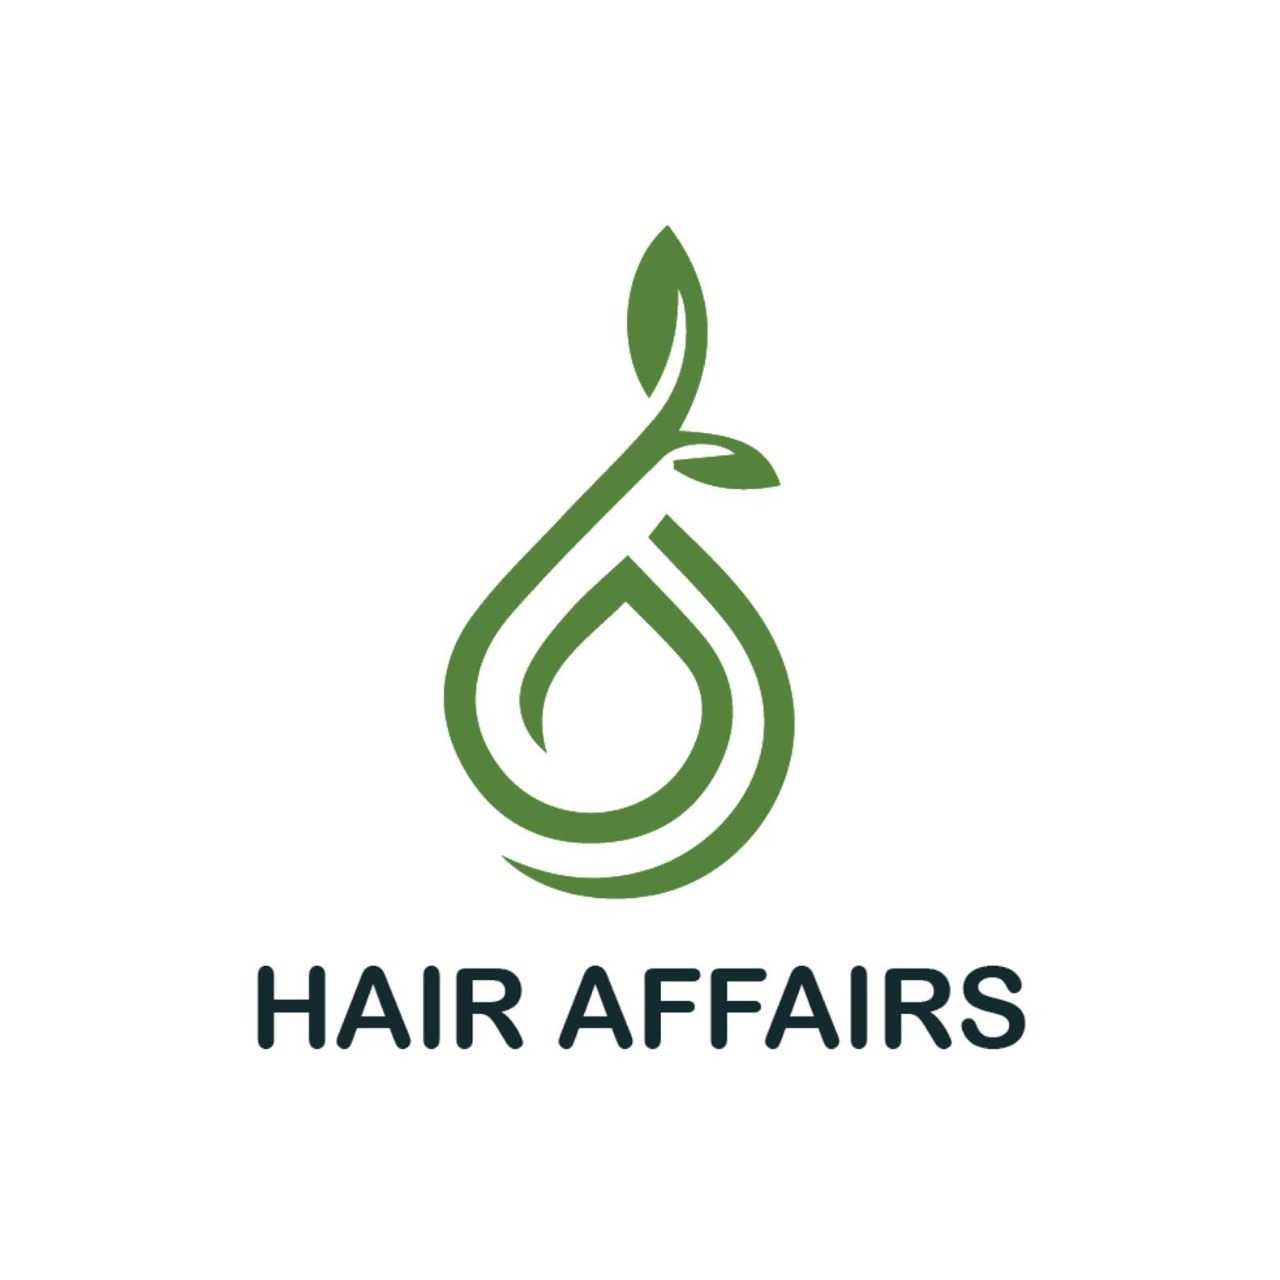 Hair Affairs by MS